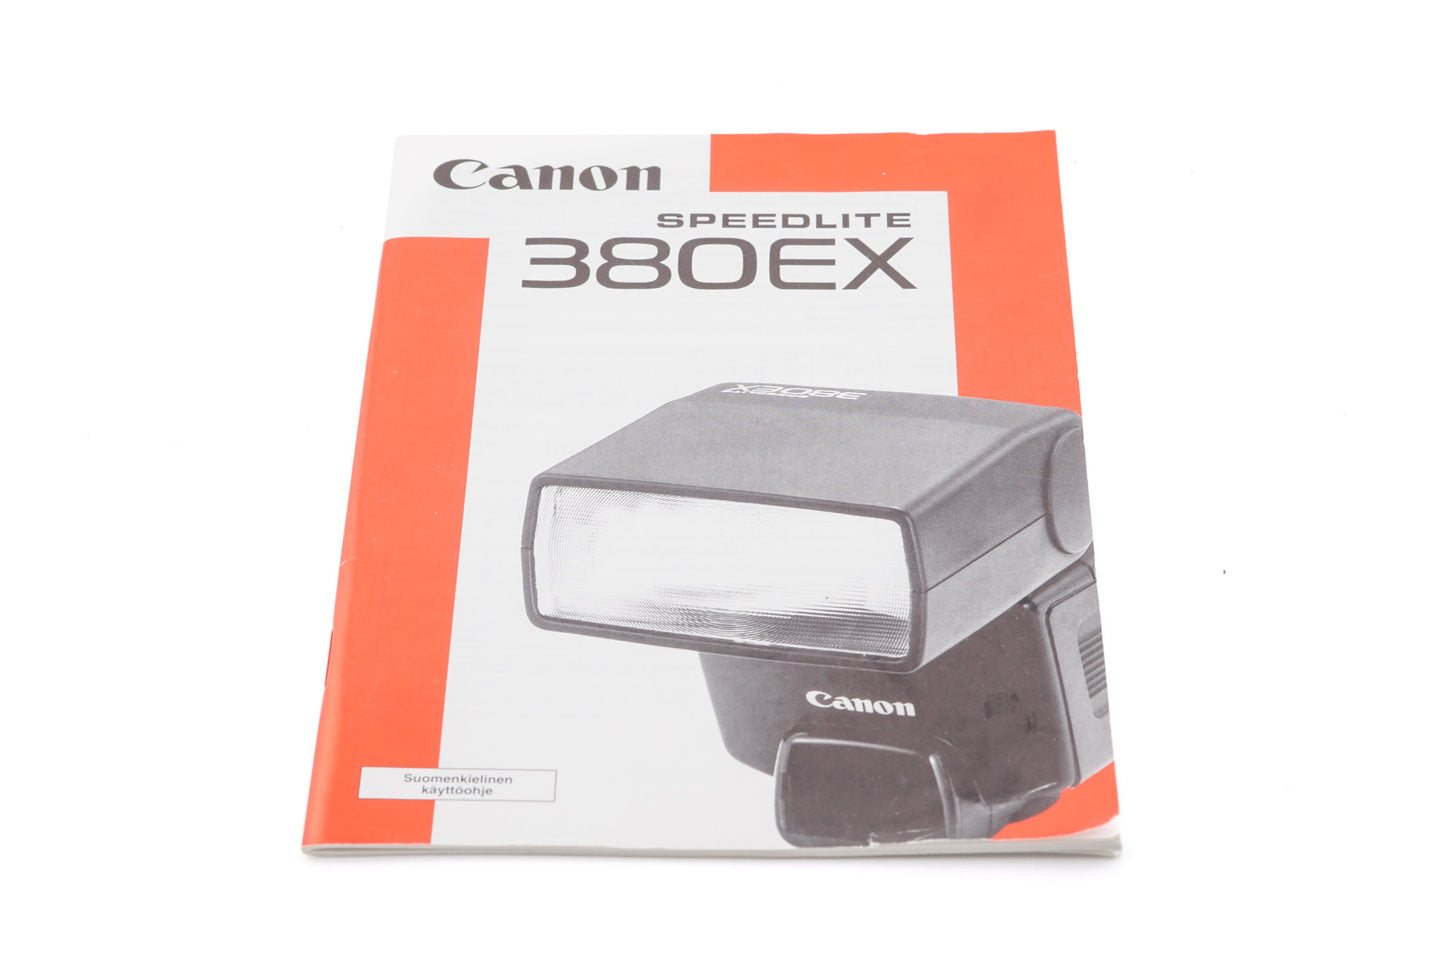 Canon Speedlite 380EX Instructions